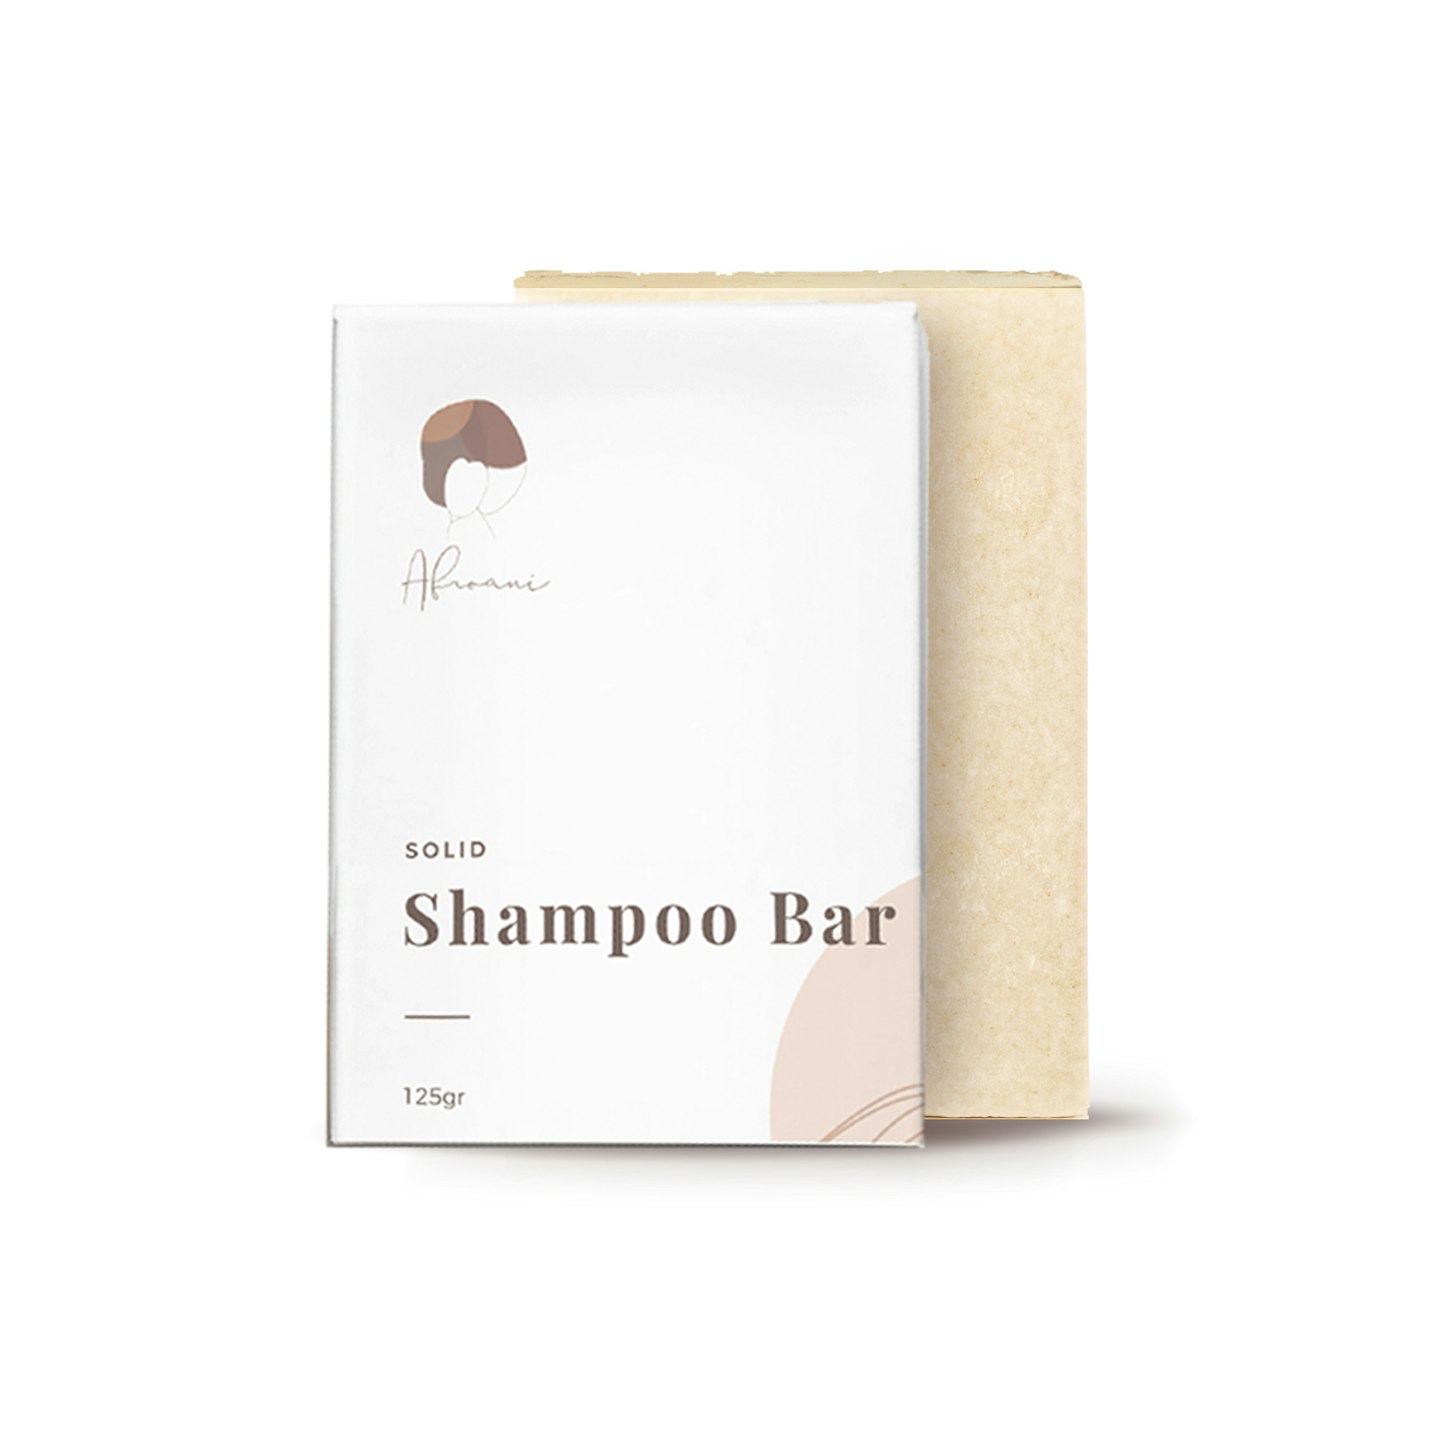 Afroani, Solid Shampoo Bar, £9.99